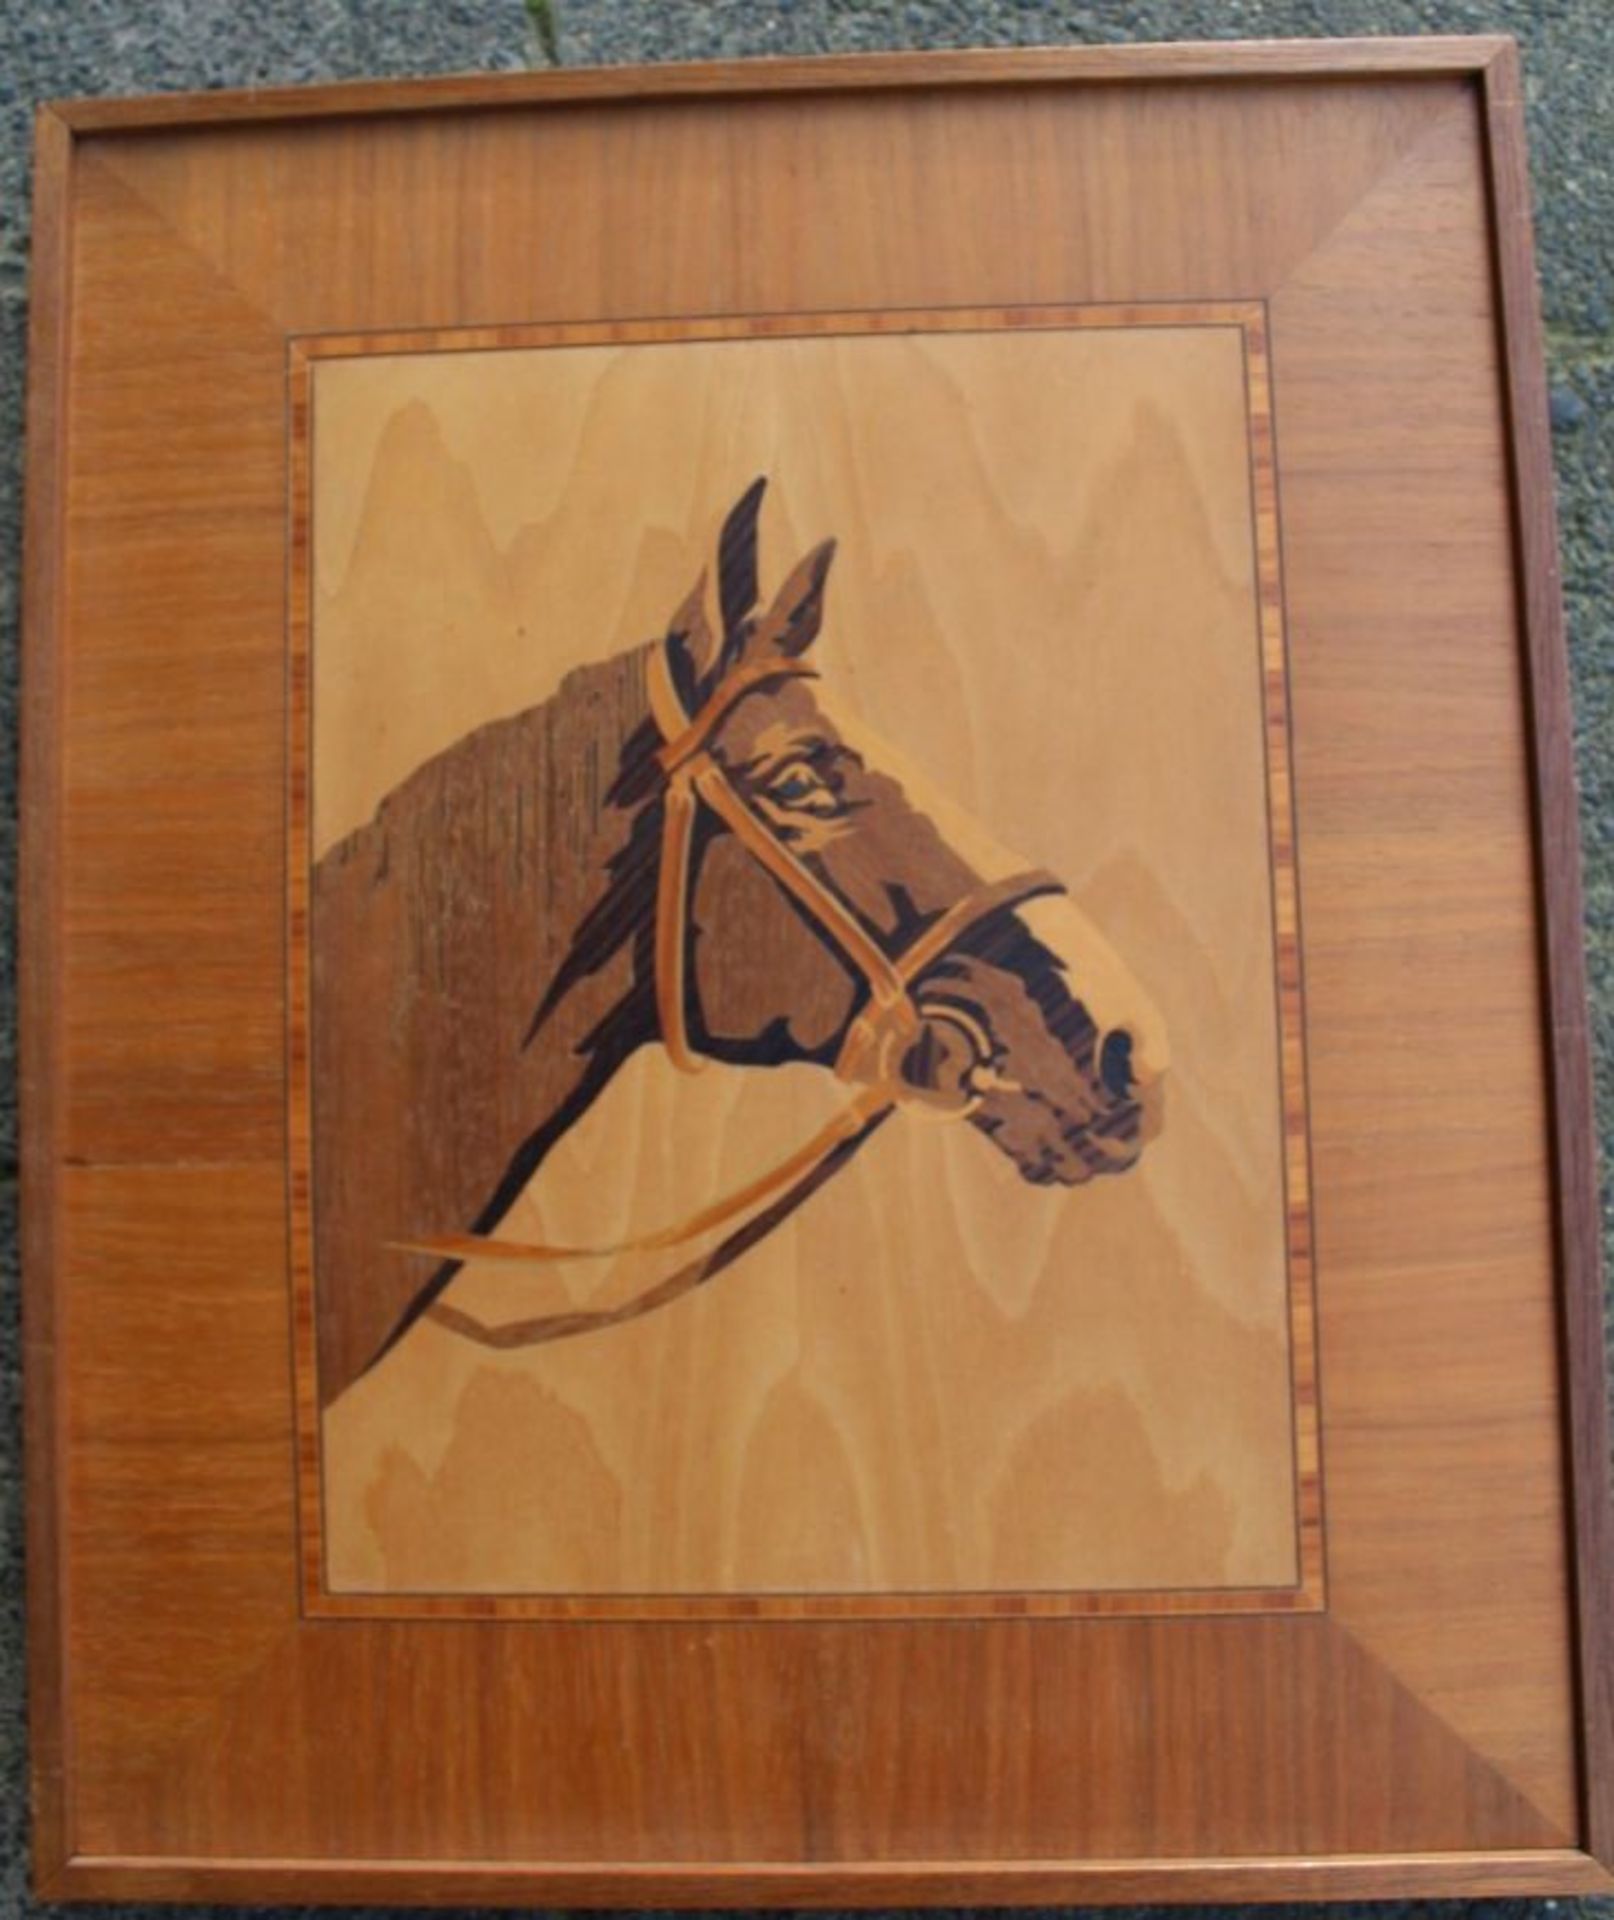 Holz-Intarsienbild "Pferdekopf" 39x32 cm